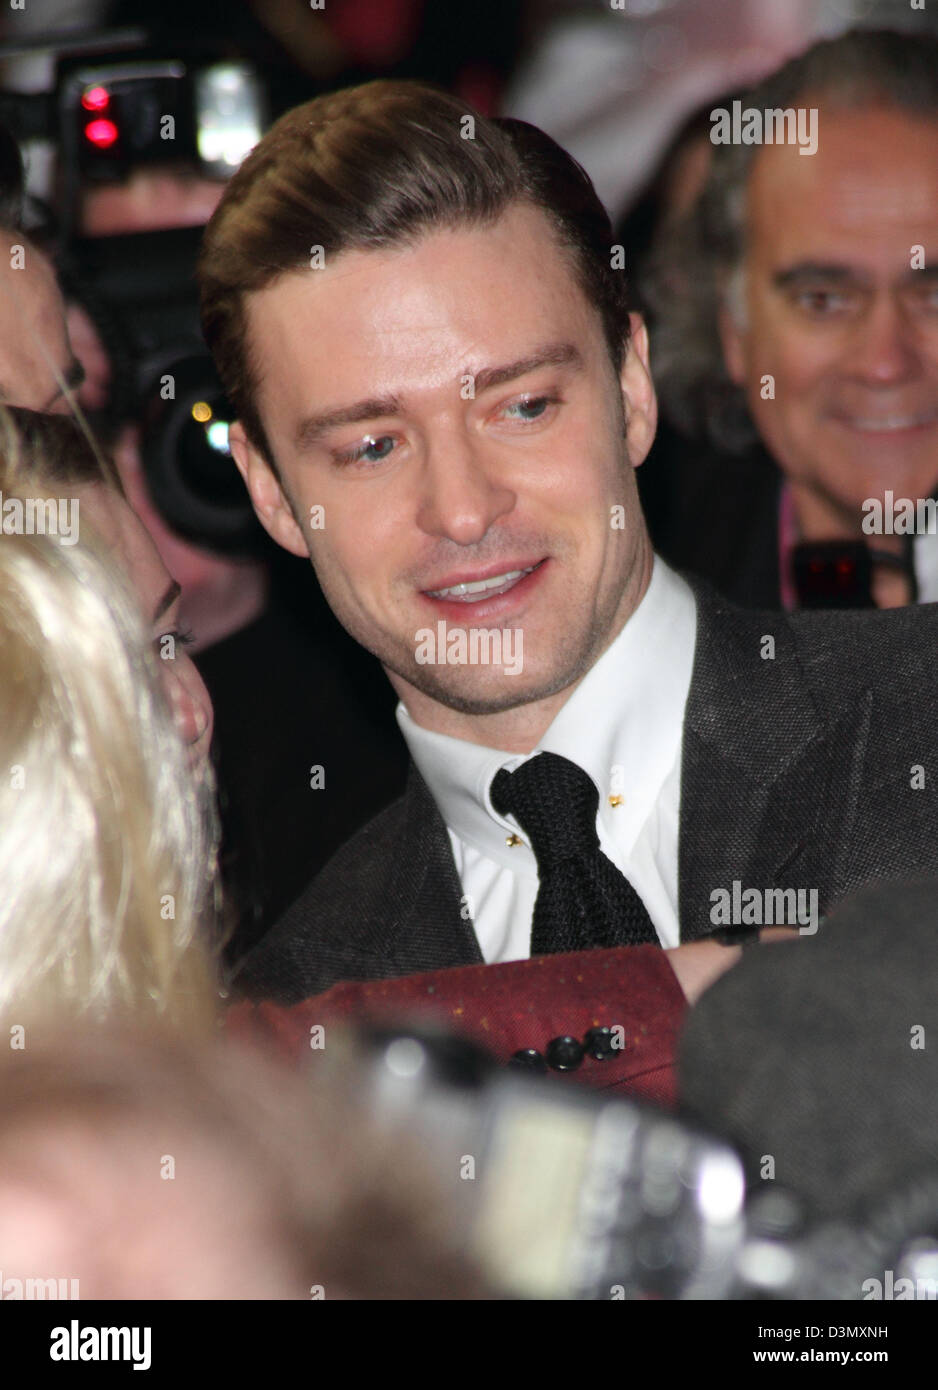 London, UK. 20th February 2013. Justin Timberlake at the The 2013 Brit Awards at the O2 Arena, London - February 20th 2013  Photo by Keith Mayhew/ Alamy Live News Stock Photo